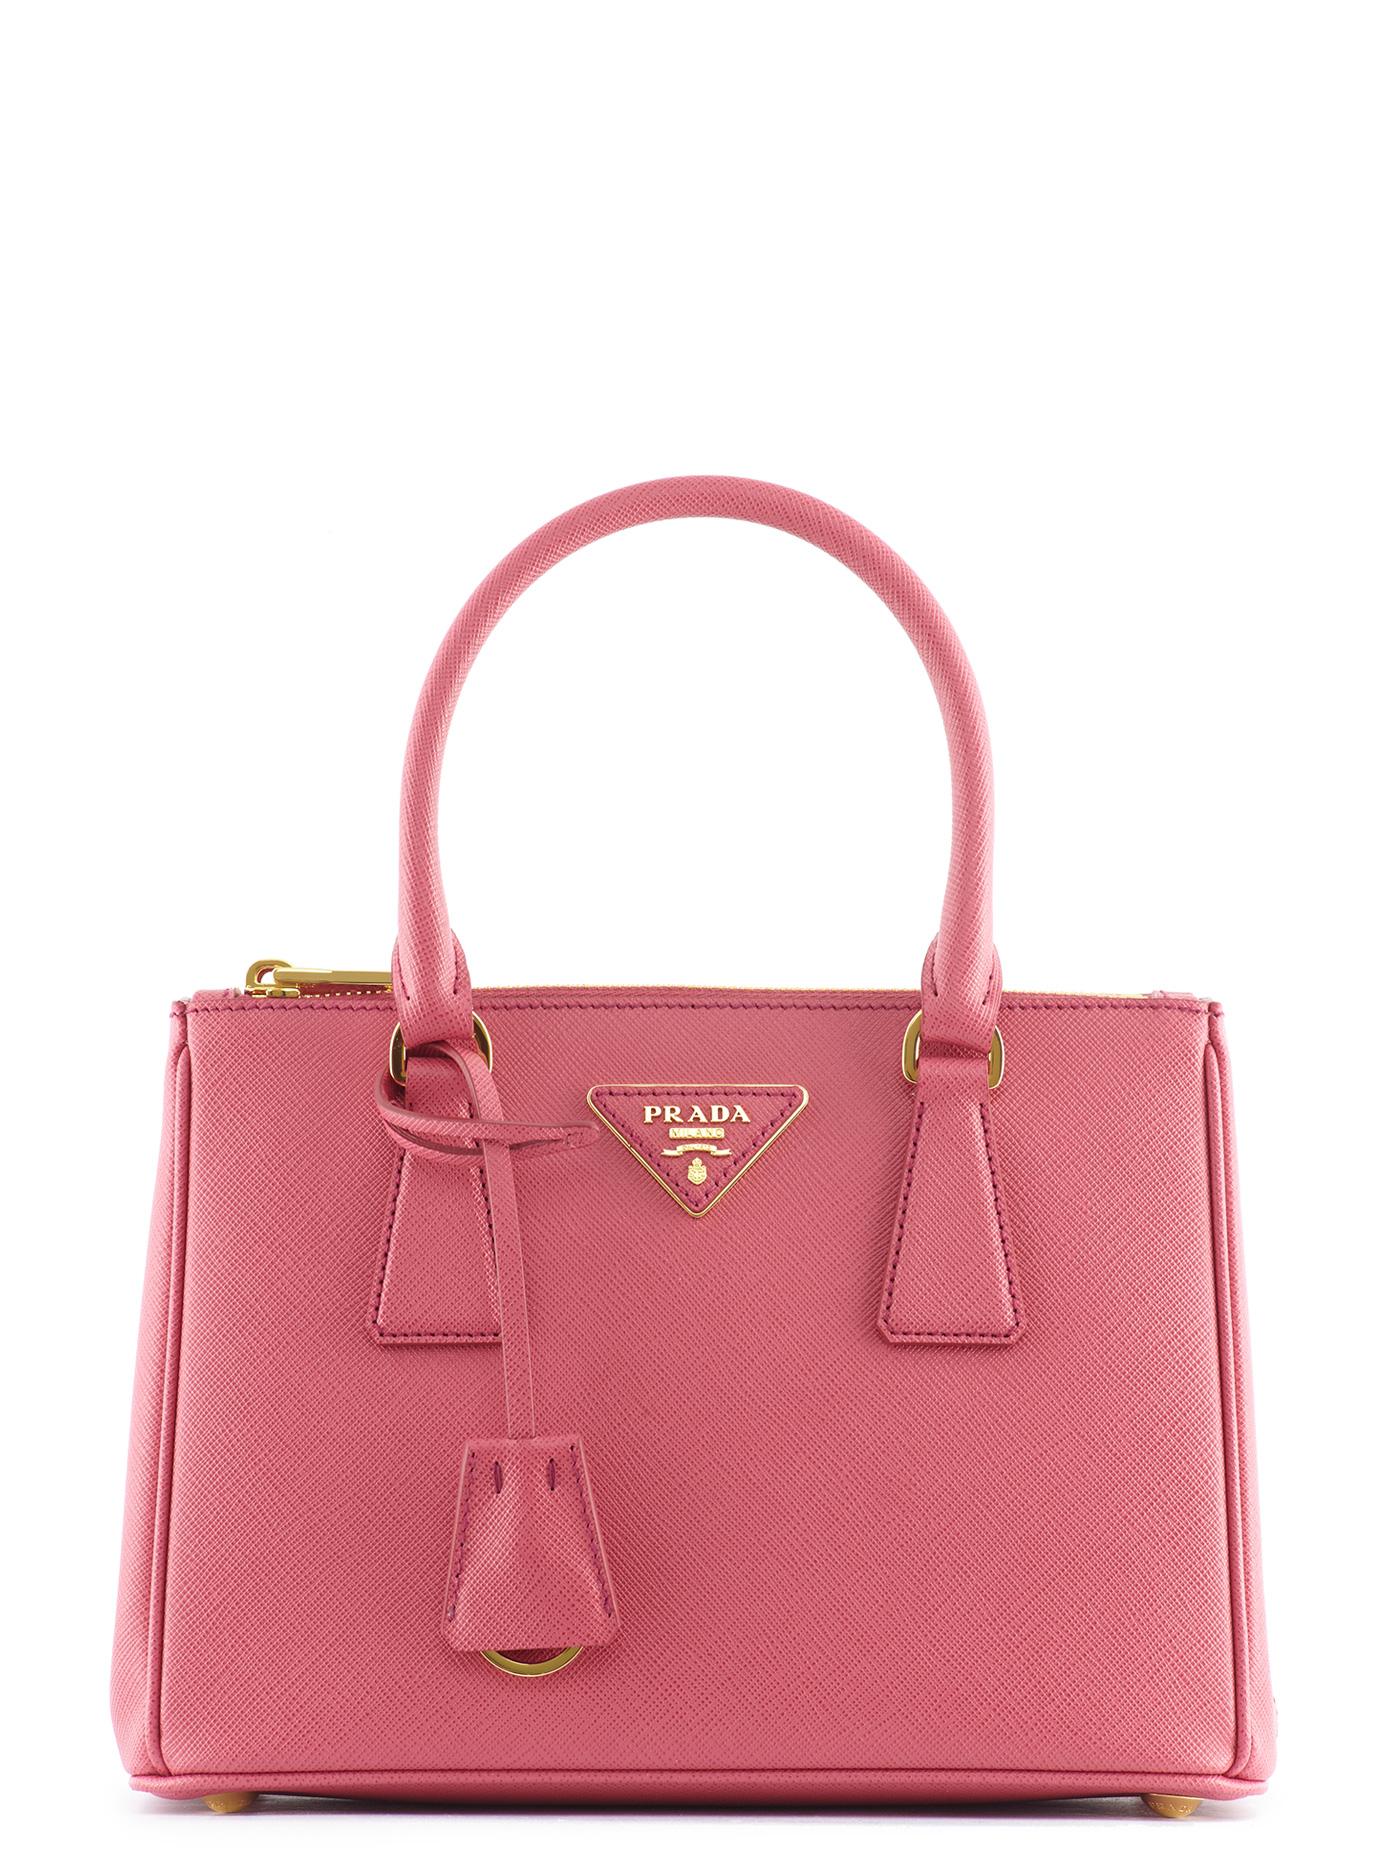 Lyst - Prada Galleria Saffiano Small Leather Shoulder Bag in Pink